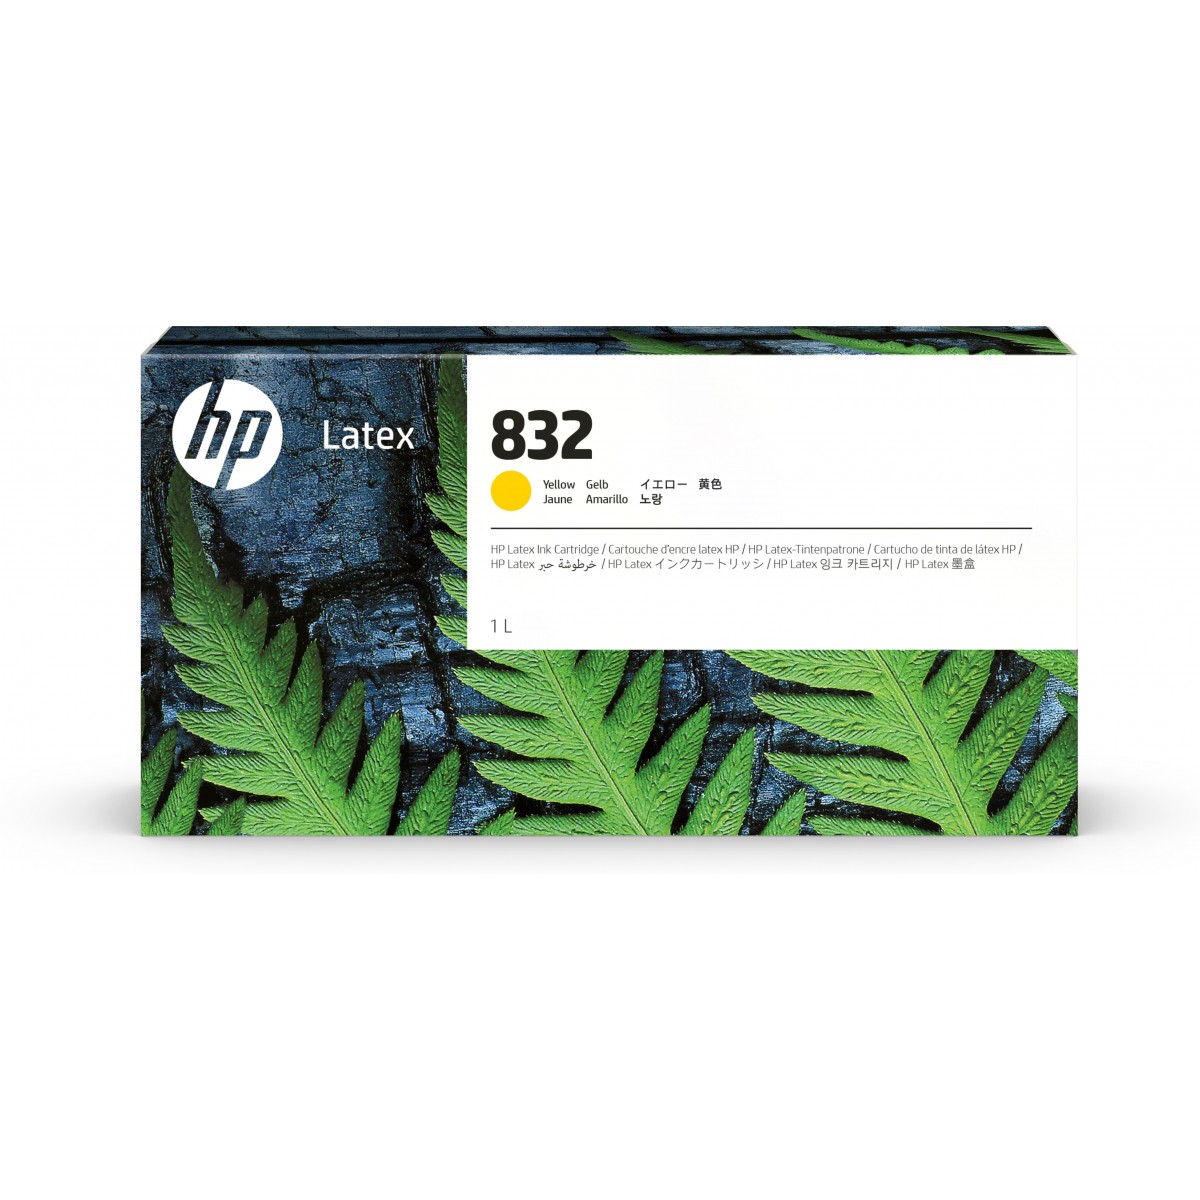 HP 832 - Original - Latex - Yellow - HP - Single pack - HP Latex 700 - 700 W - 800 - 800 W Printers